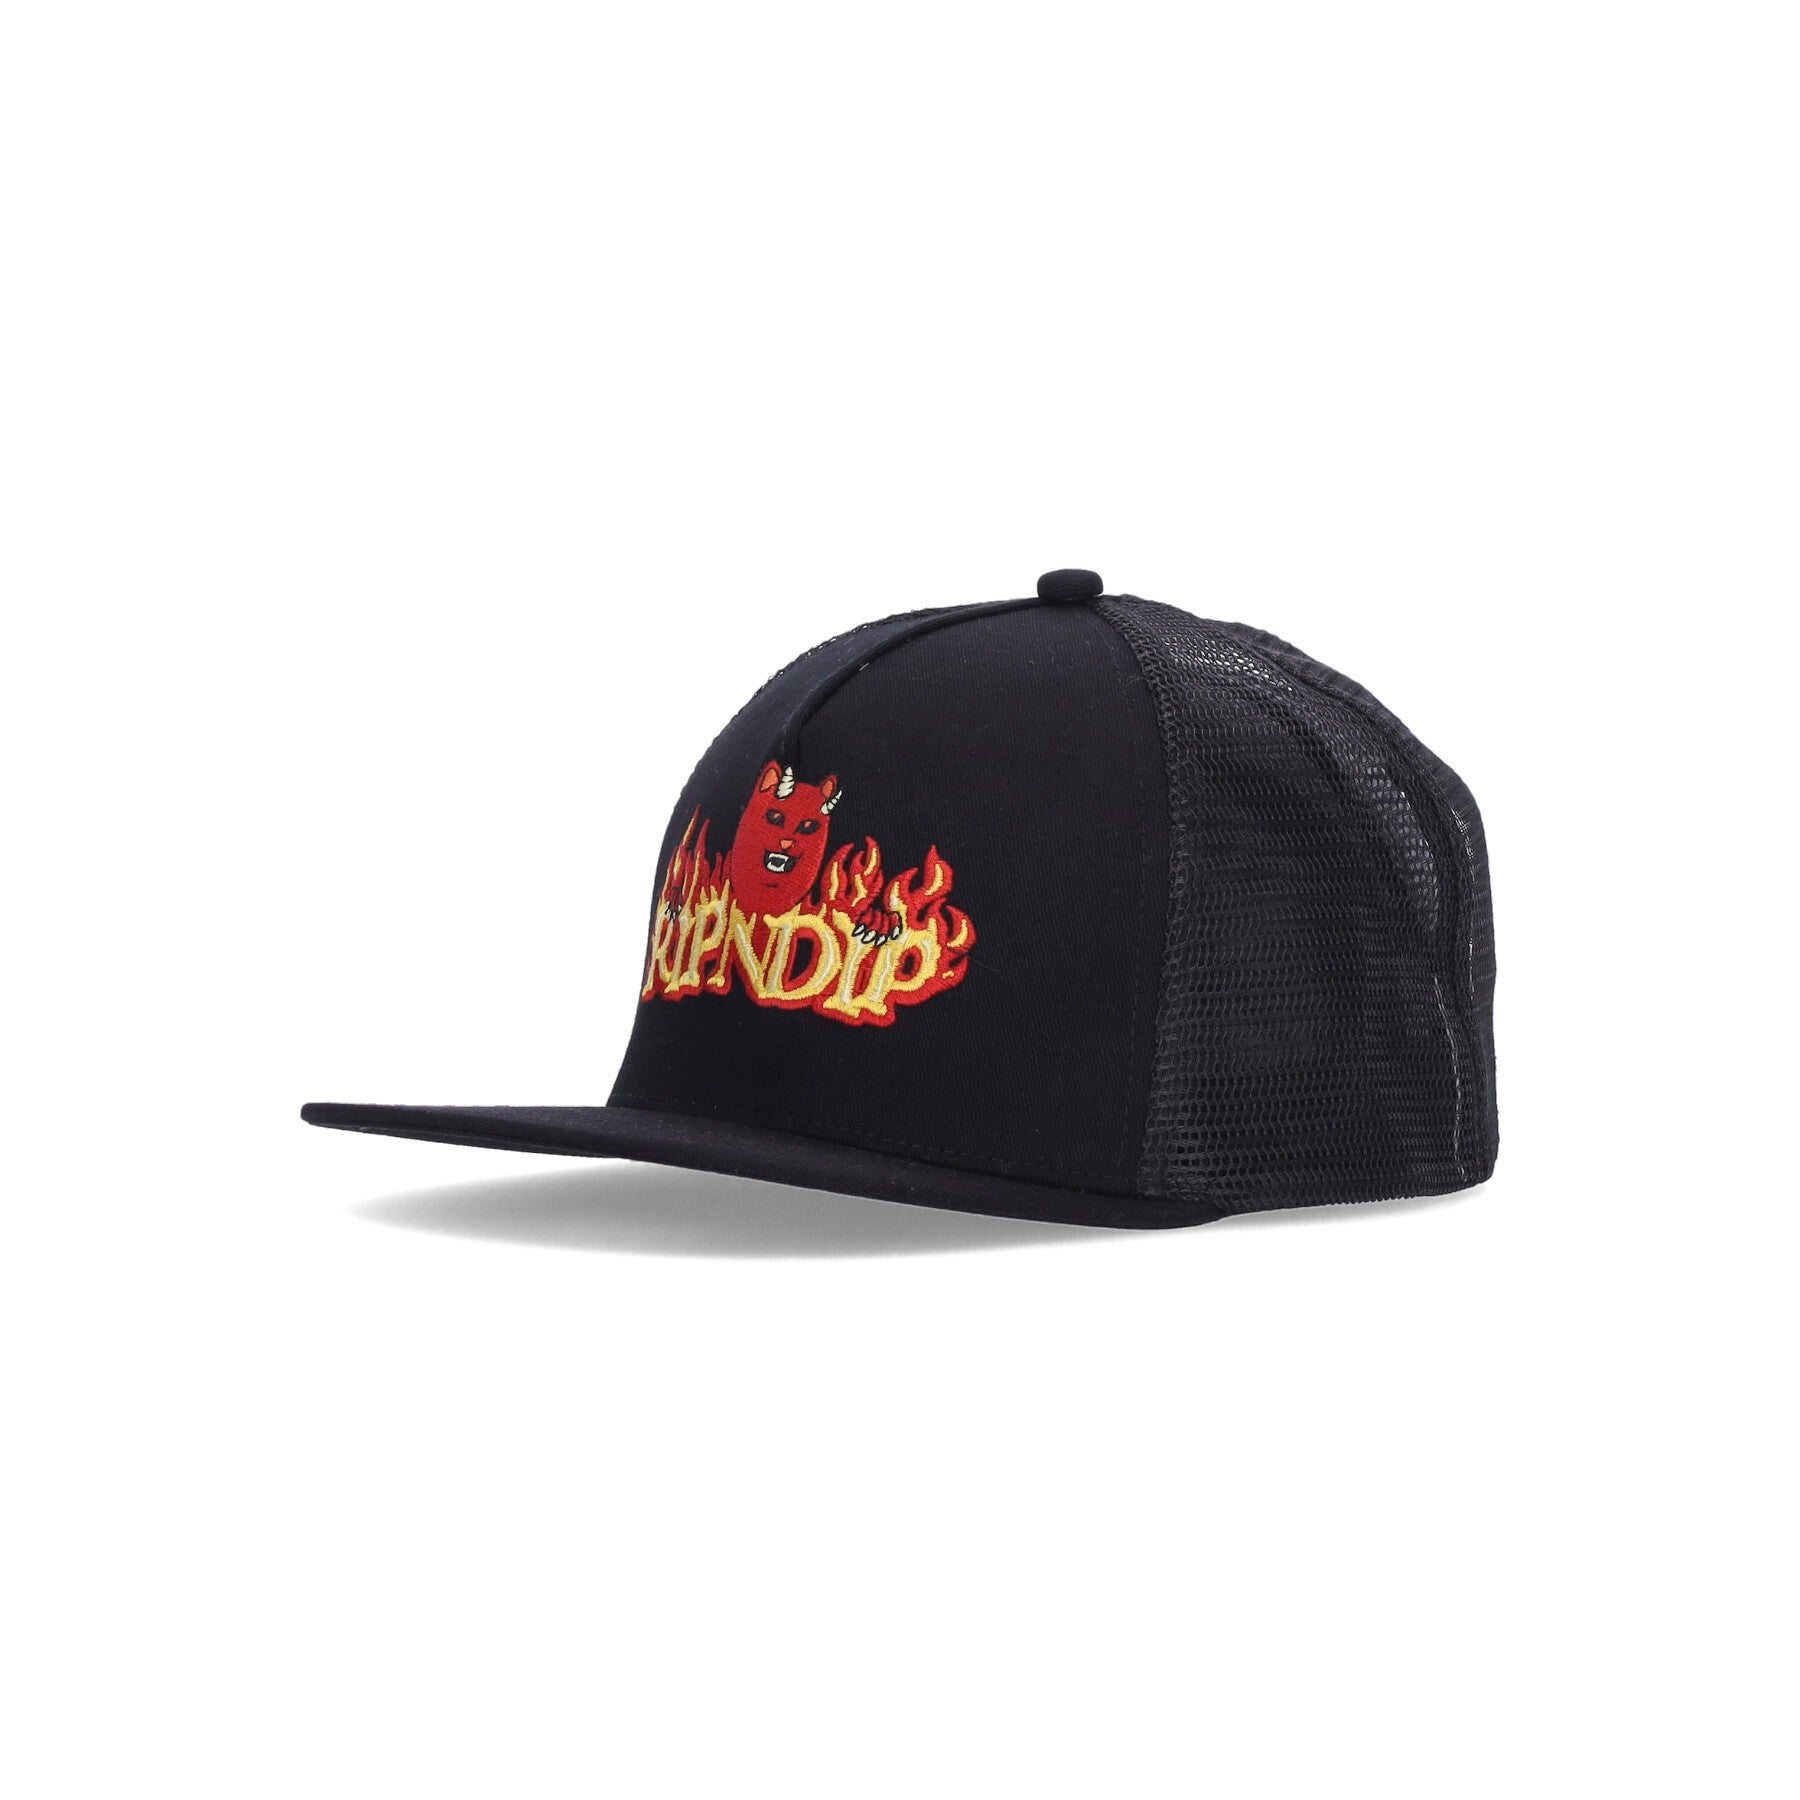 Ripndip, Cappellino Visiera Piatta Uomo Devils Work Trucker Hat, Black